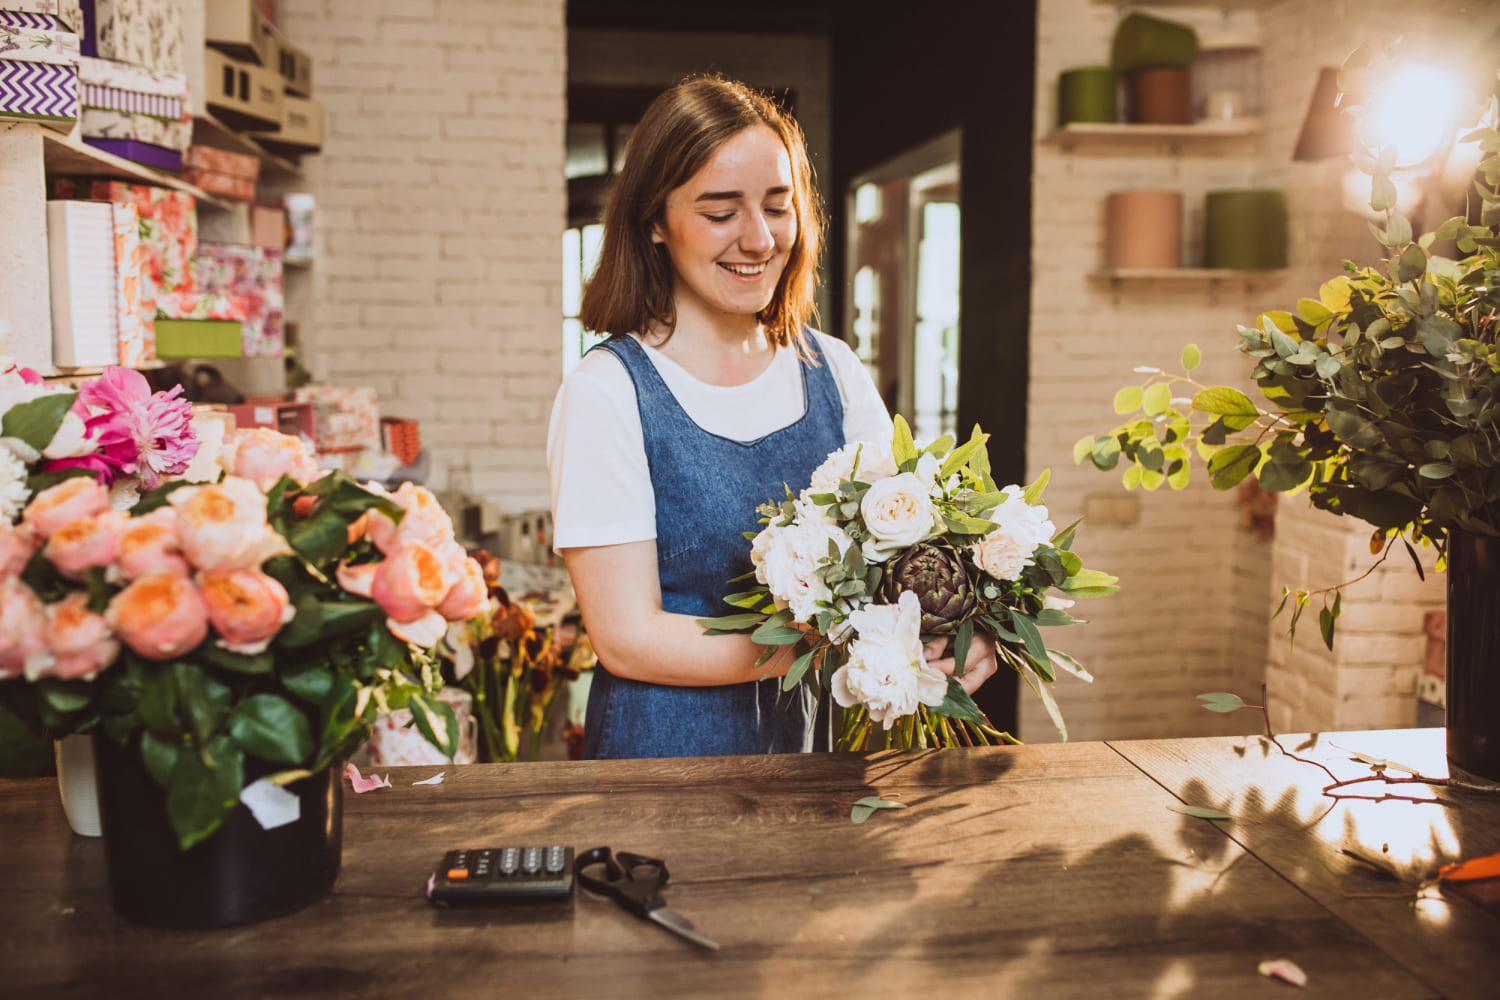 fleuriste-femme-dans-son-propre-magasin-fleurs-prenant-soin-fleurs